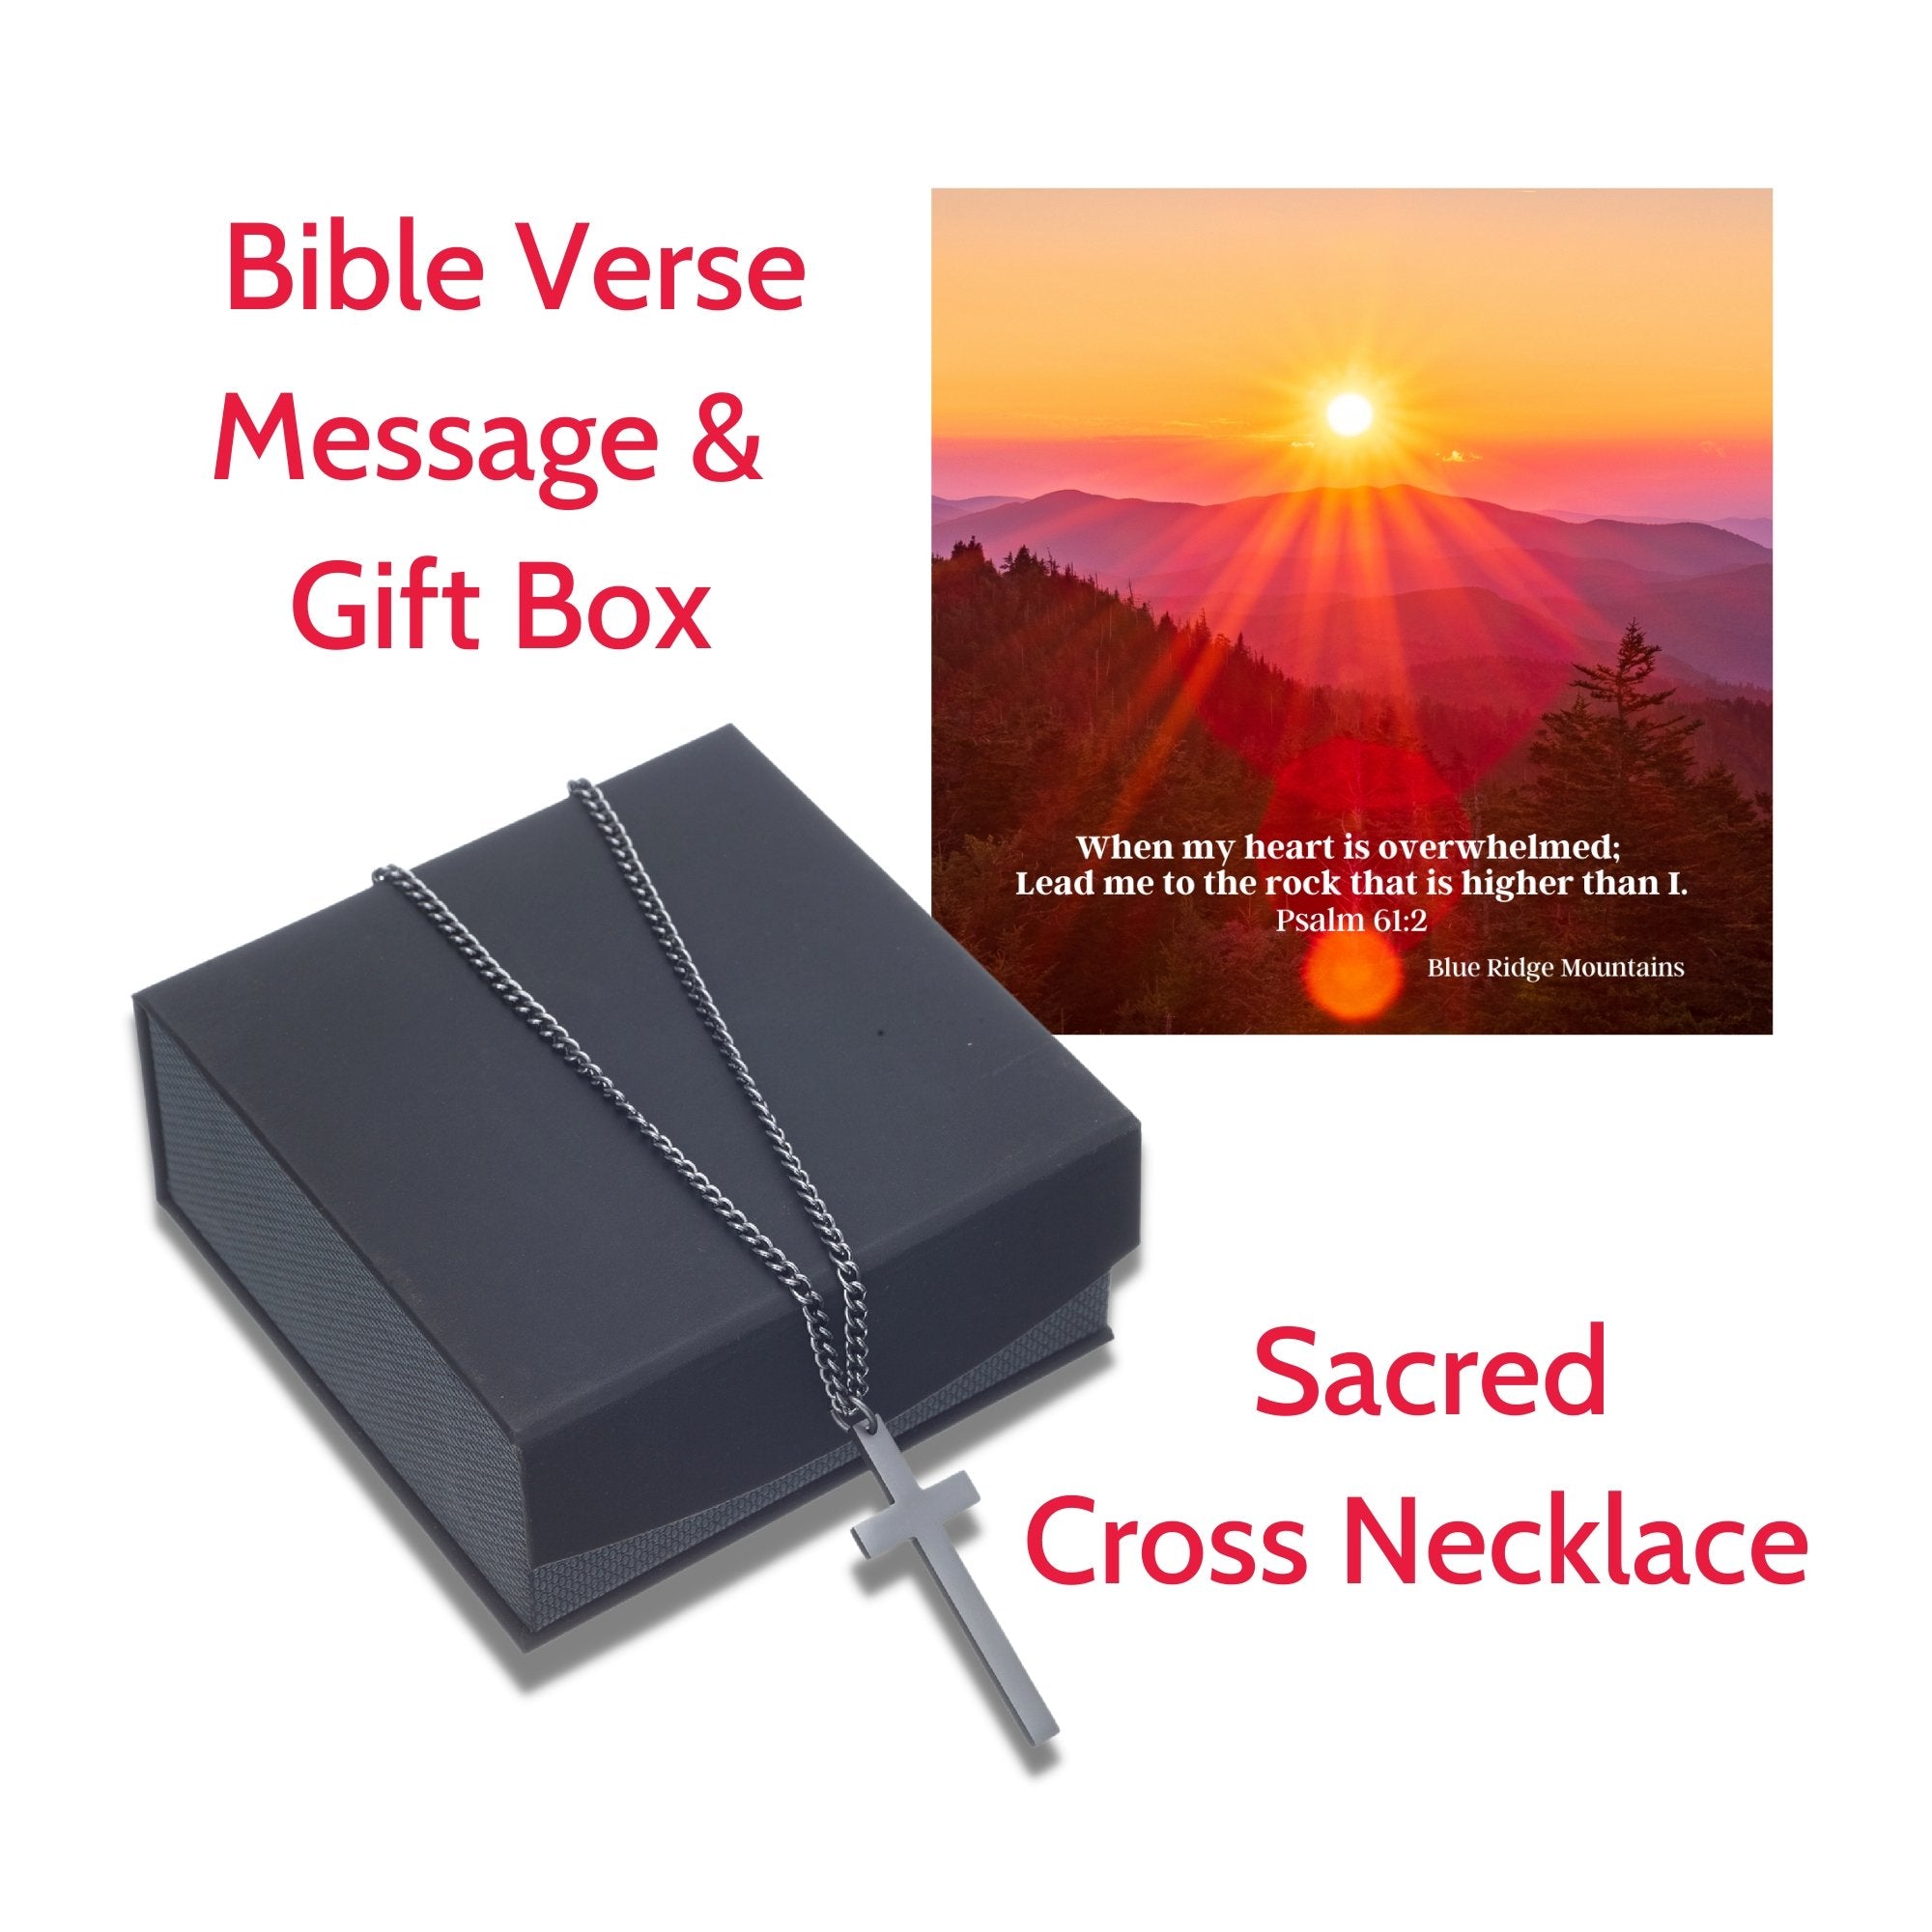 Sacred Cross Necklace, Bible Verse Psalm 61:2, Blue Ridge Mountains